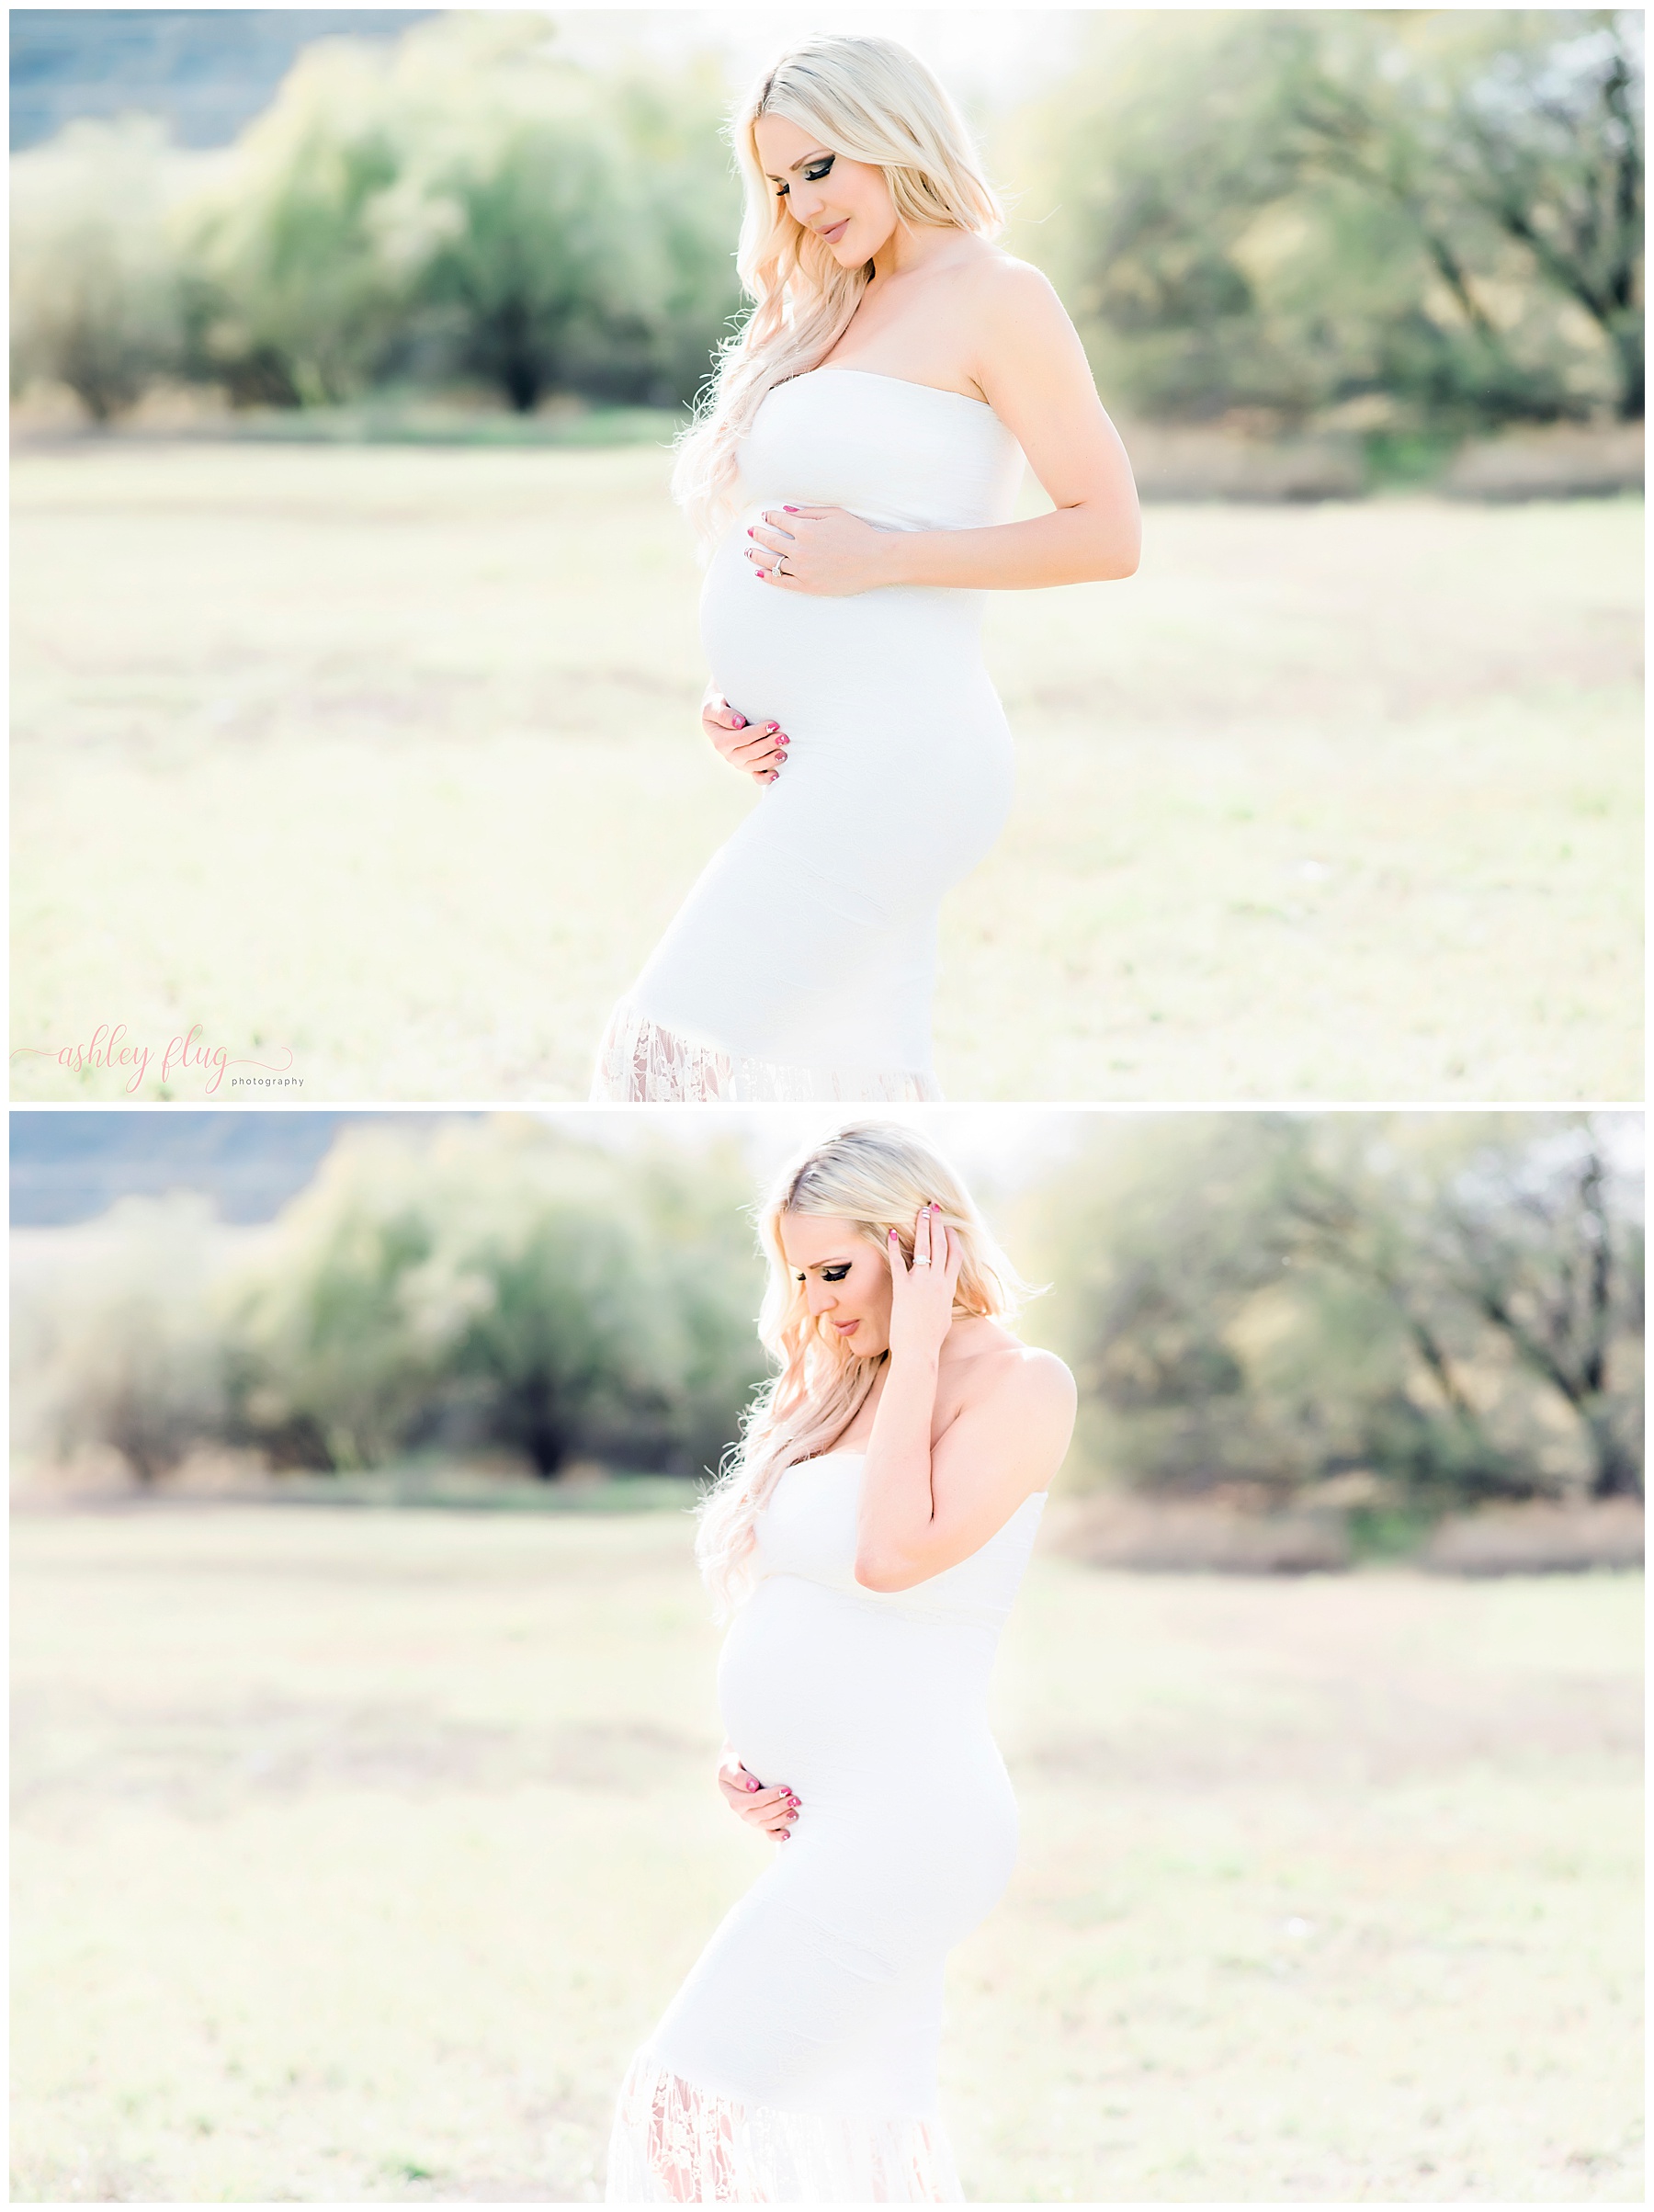 Cooper's-Family-Maternity-Photography-Glendale-Arizona-Ashley-Flug-Photography56-WM.jpg